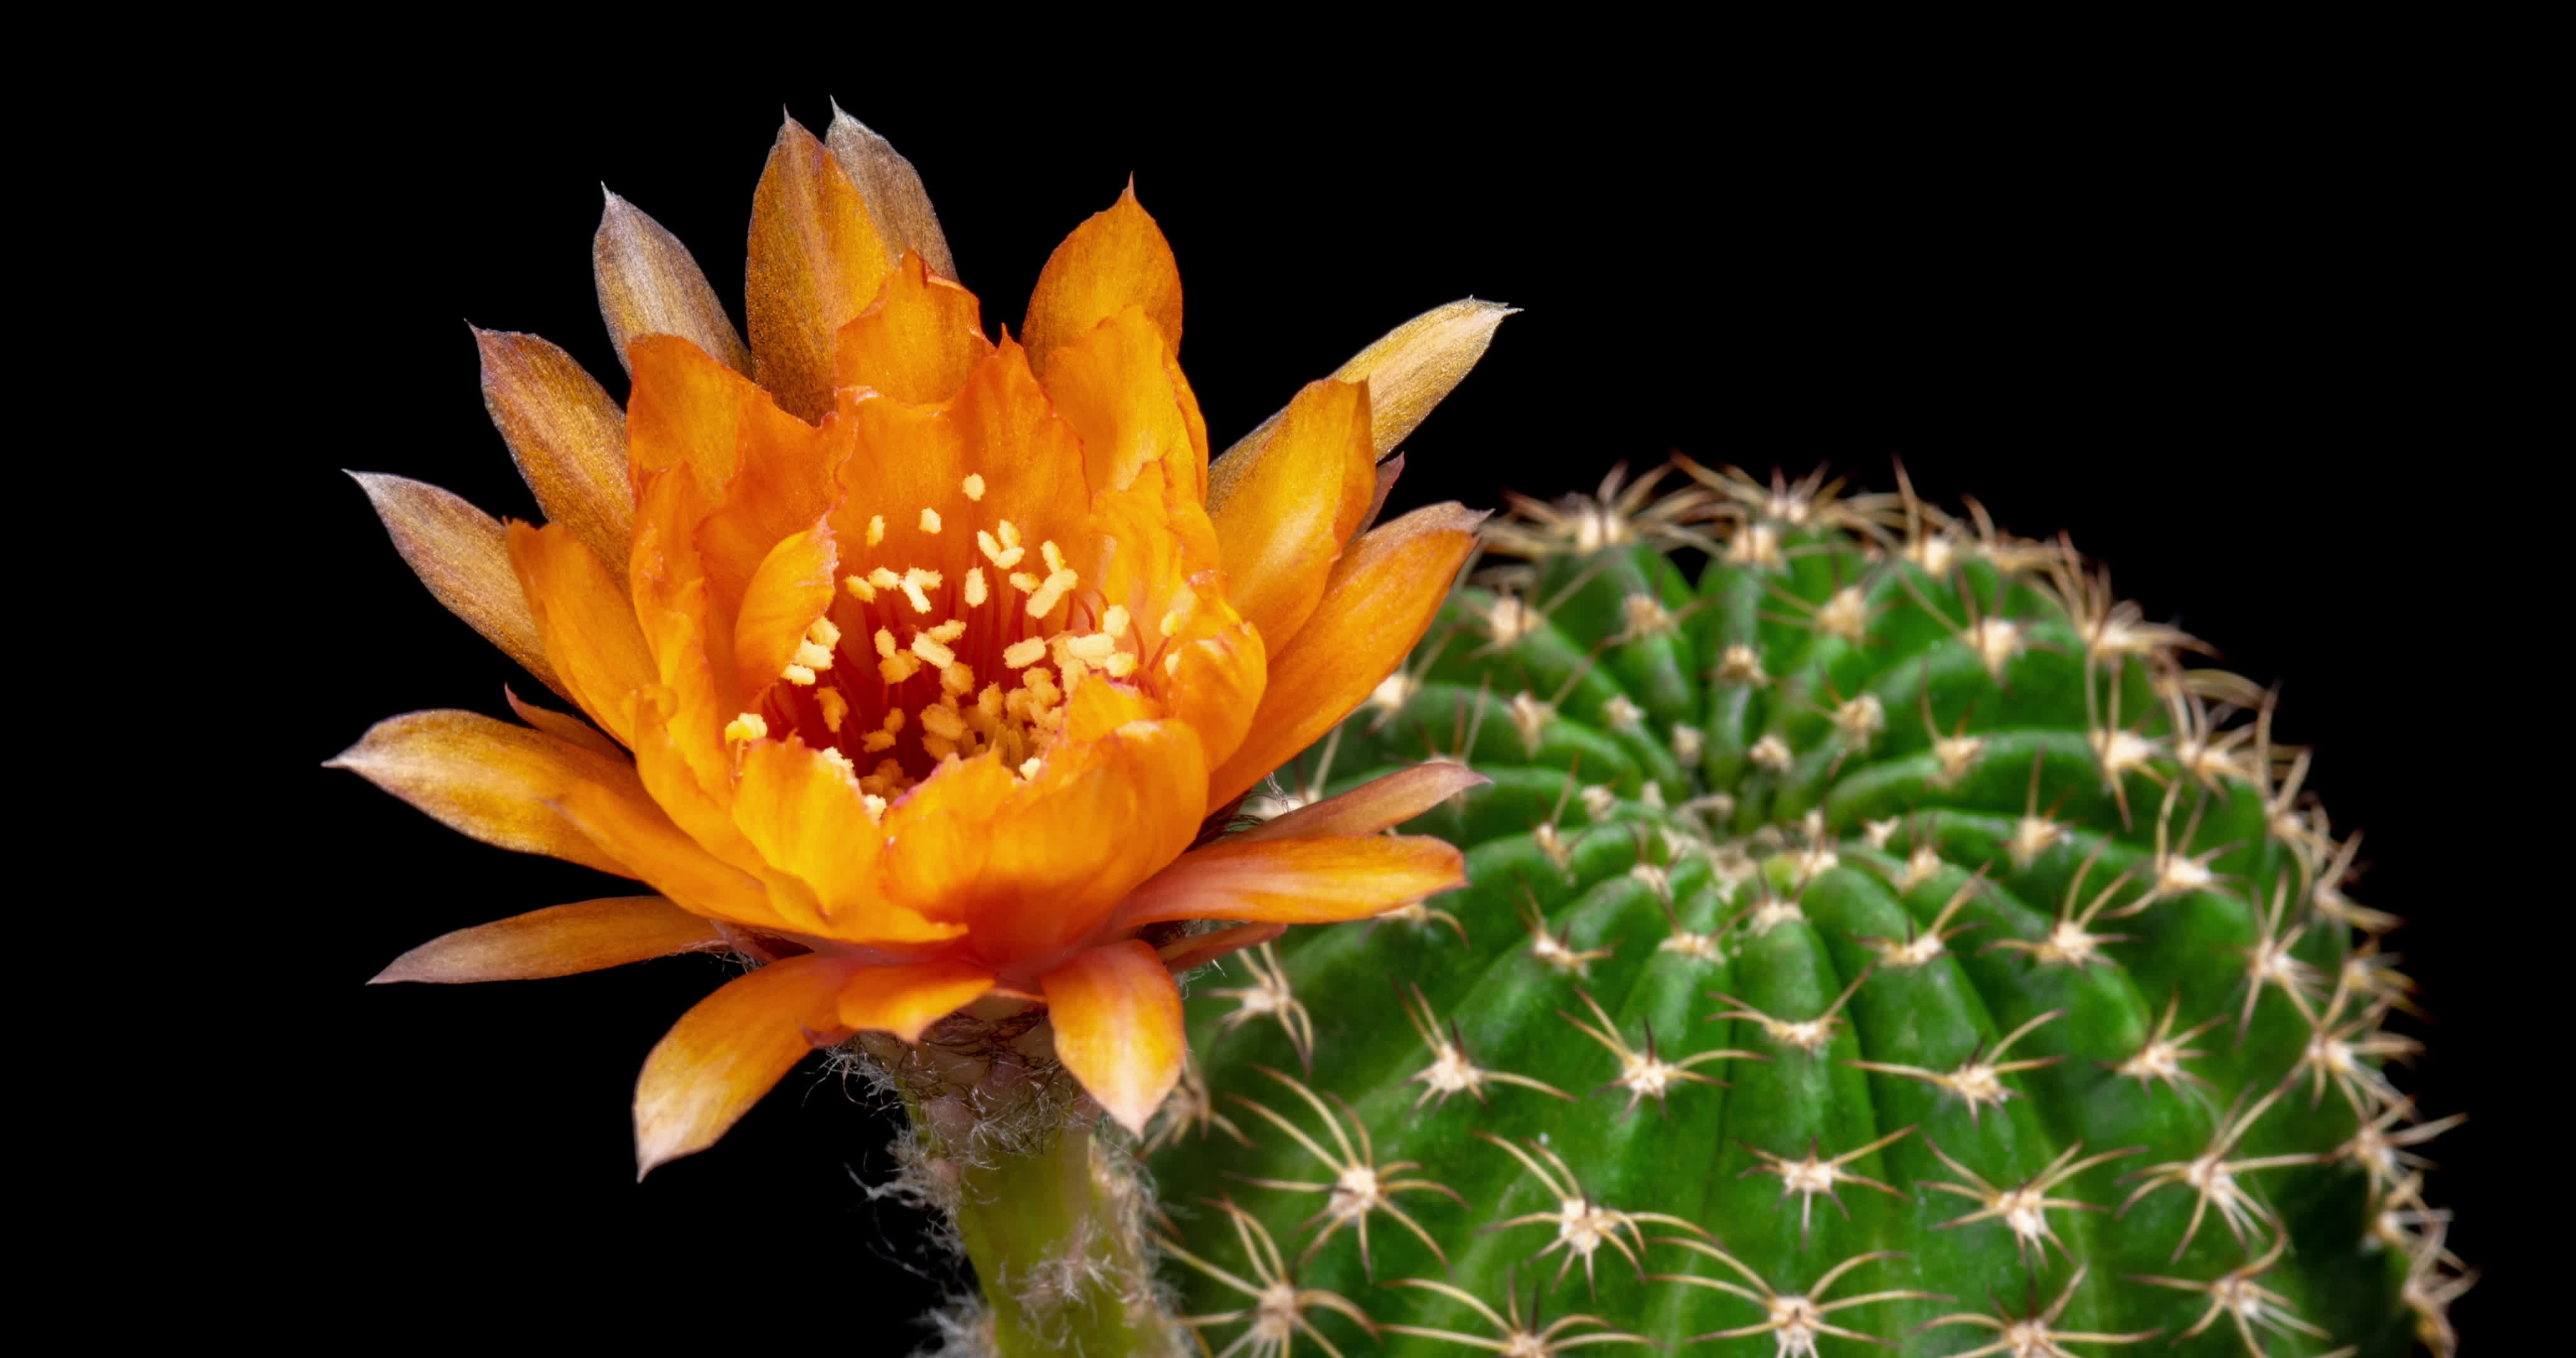 timelapse de flor de naranja en flor, apertura de cactus lobivia 2251017  Vídeo de stock en Vecteezy